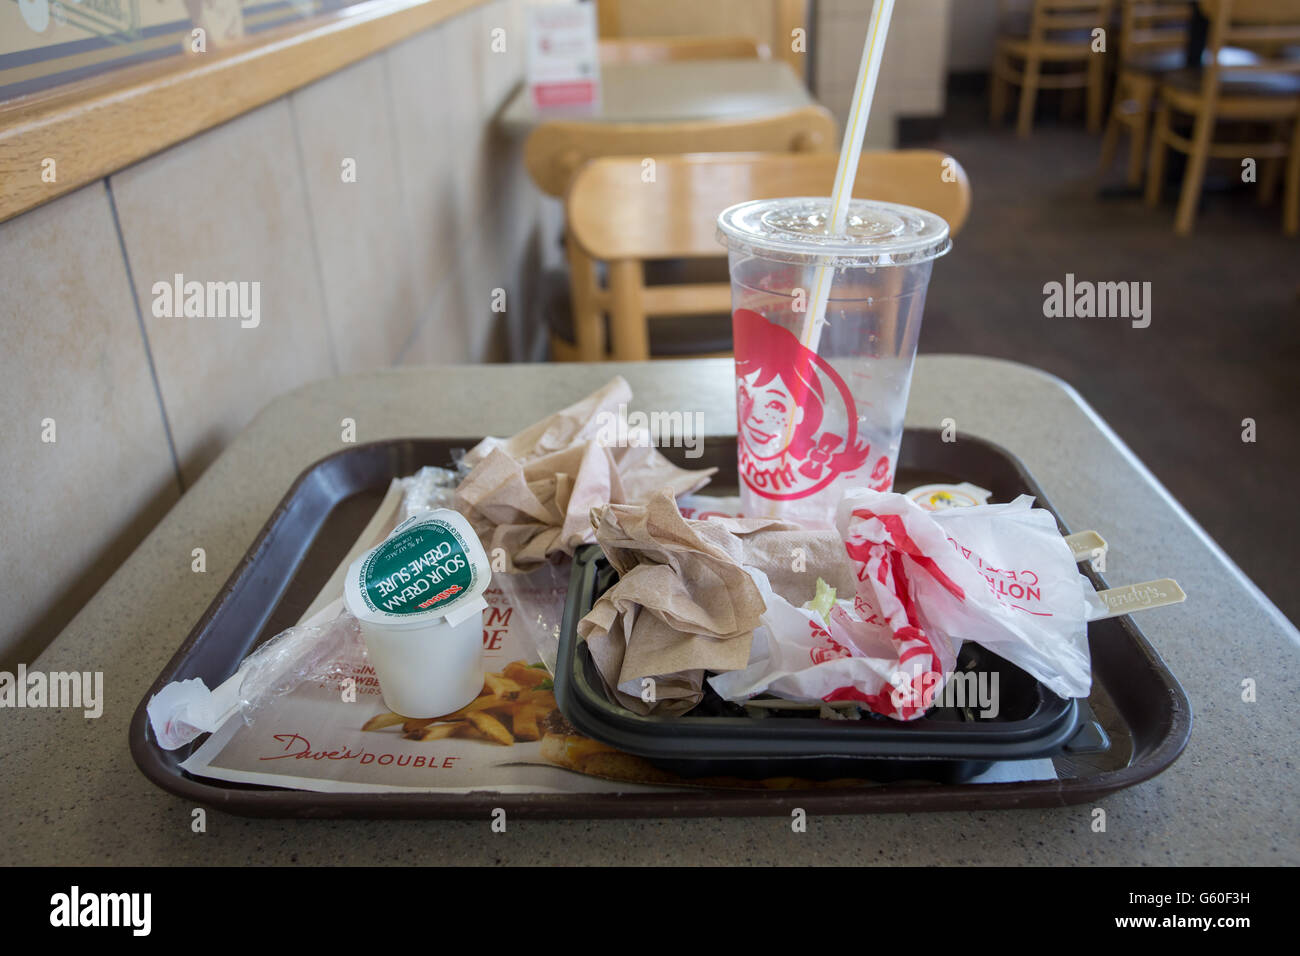 junk food trash inside fast food restaurant Stock Photo